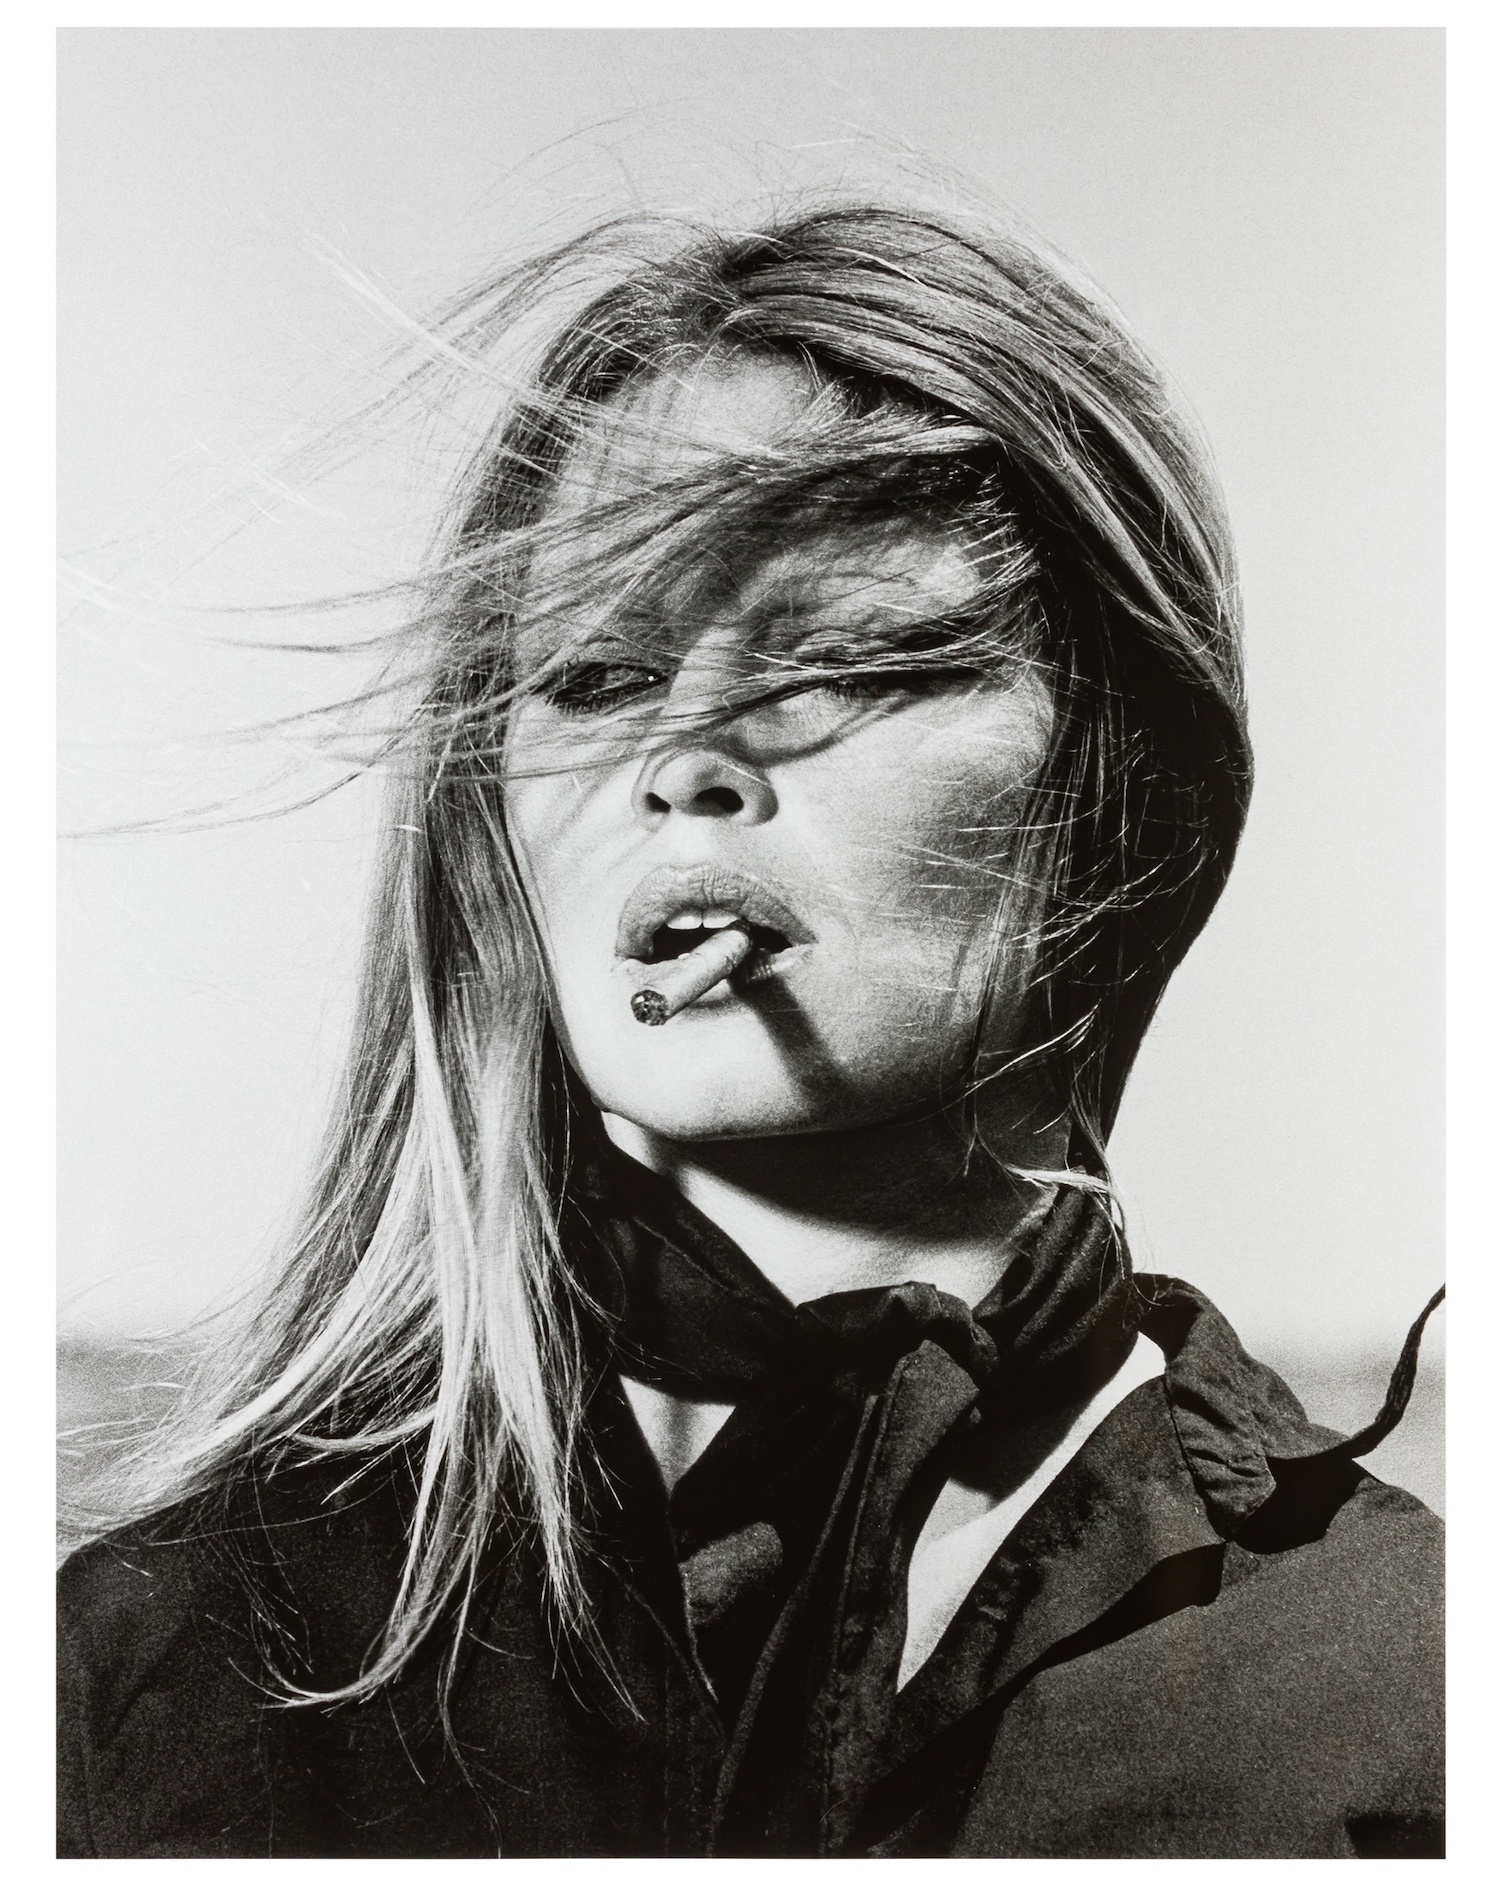 Brigitte Bardot photographed by Terry O'Neill